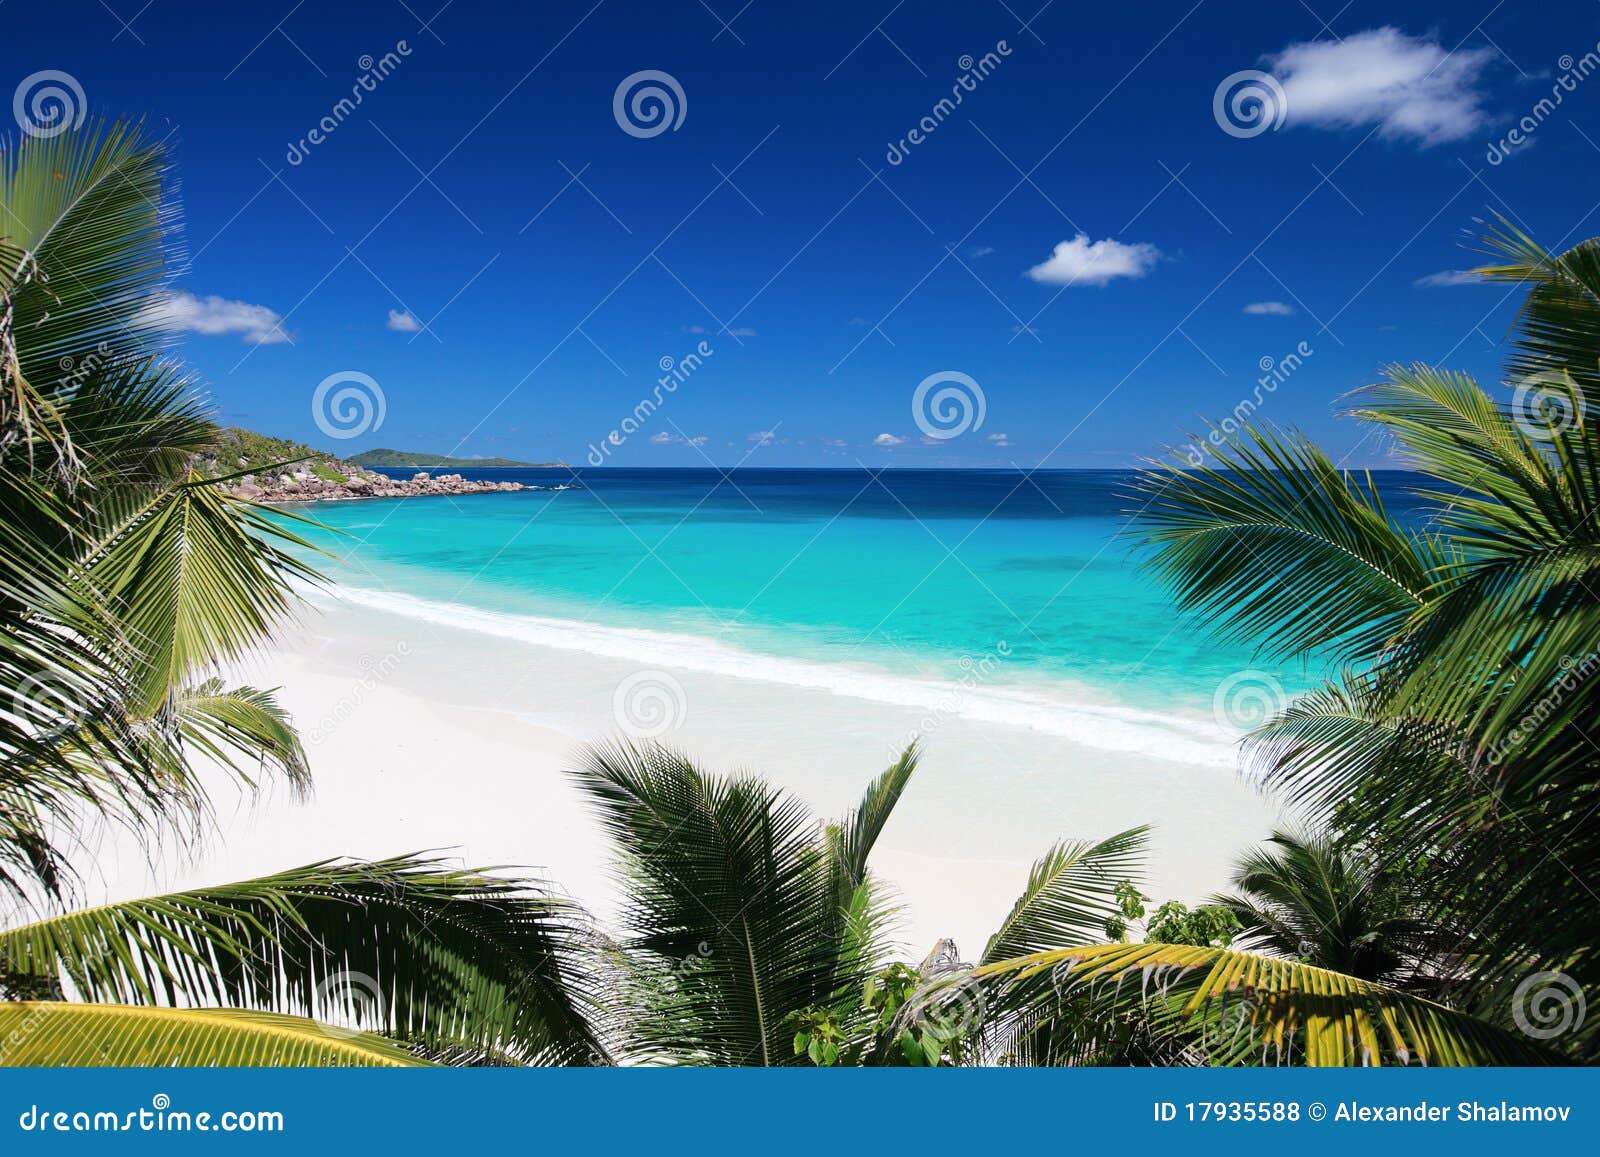 idyllic beach in seychelles